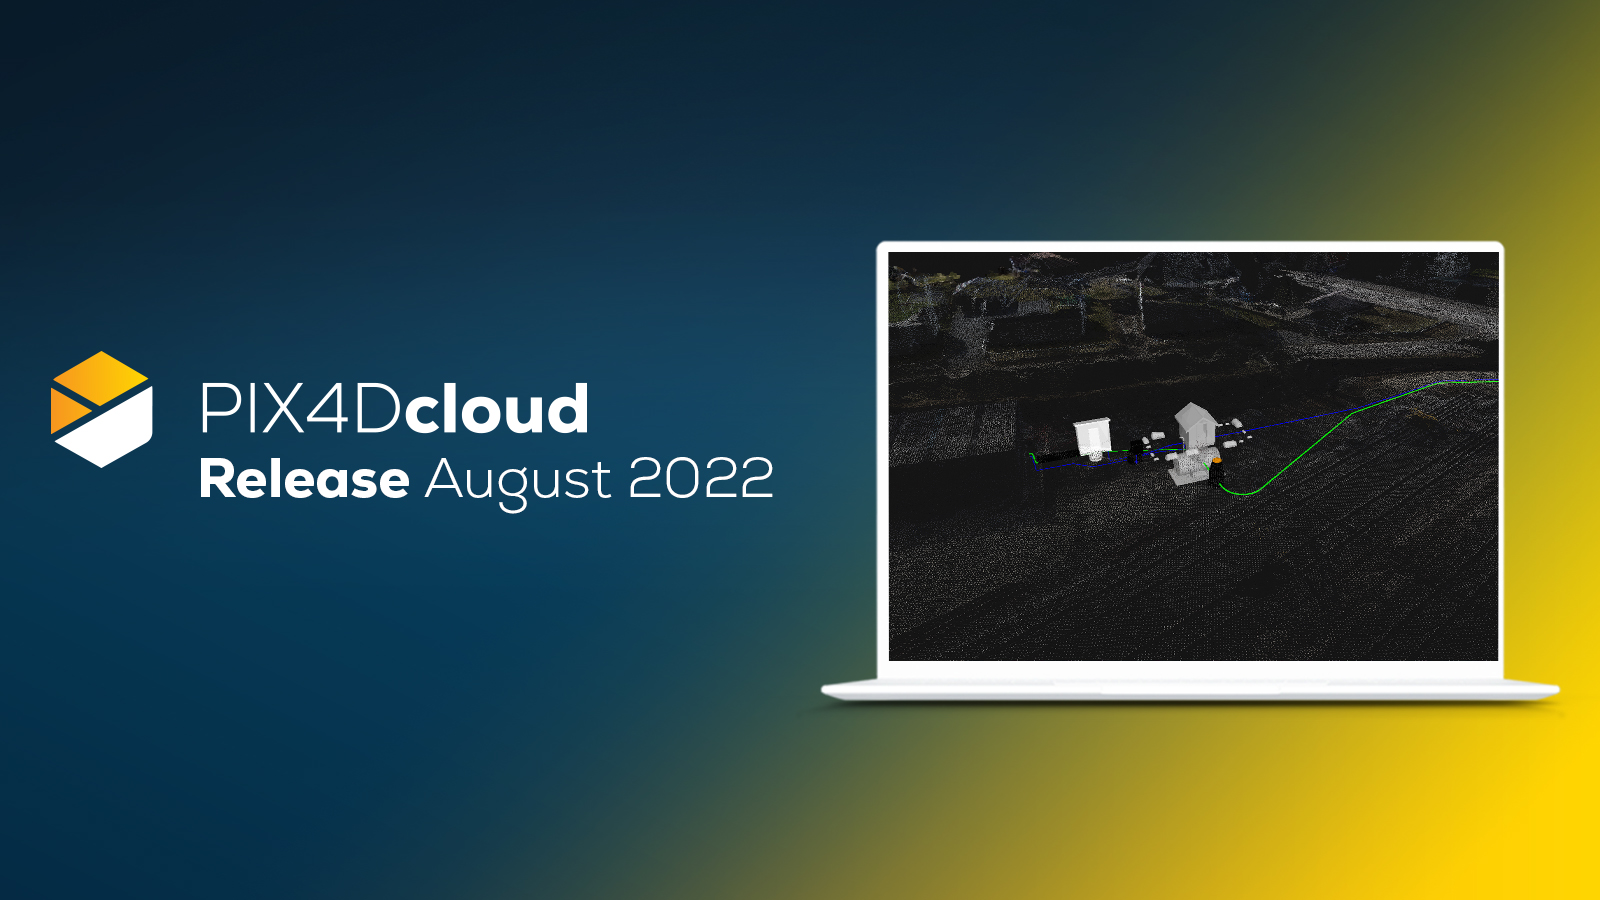 HEA CLO Pix4Dcloud Release 2022